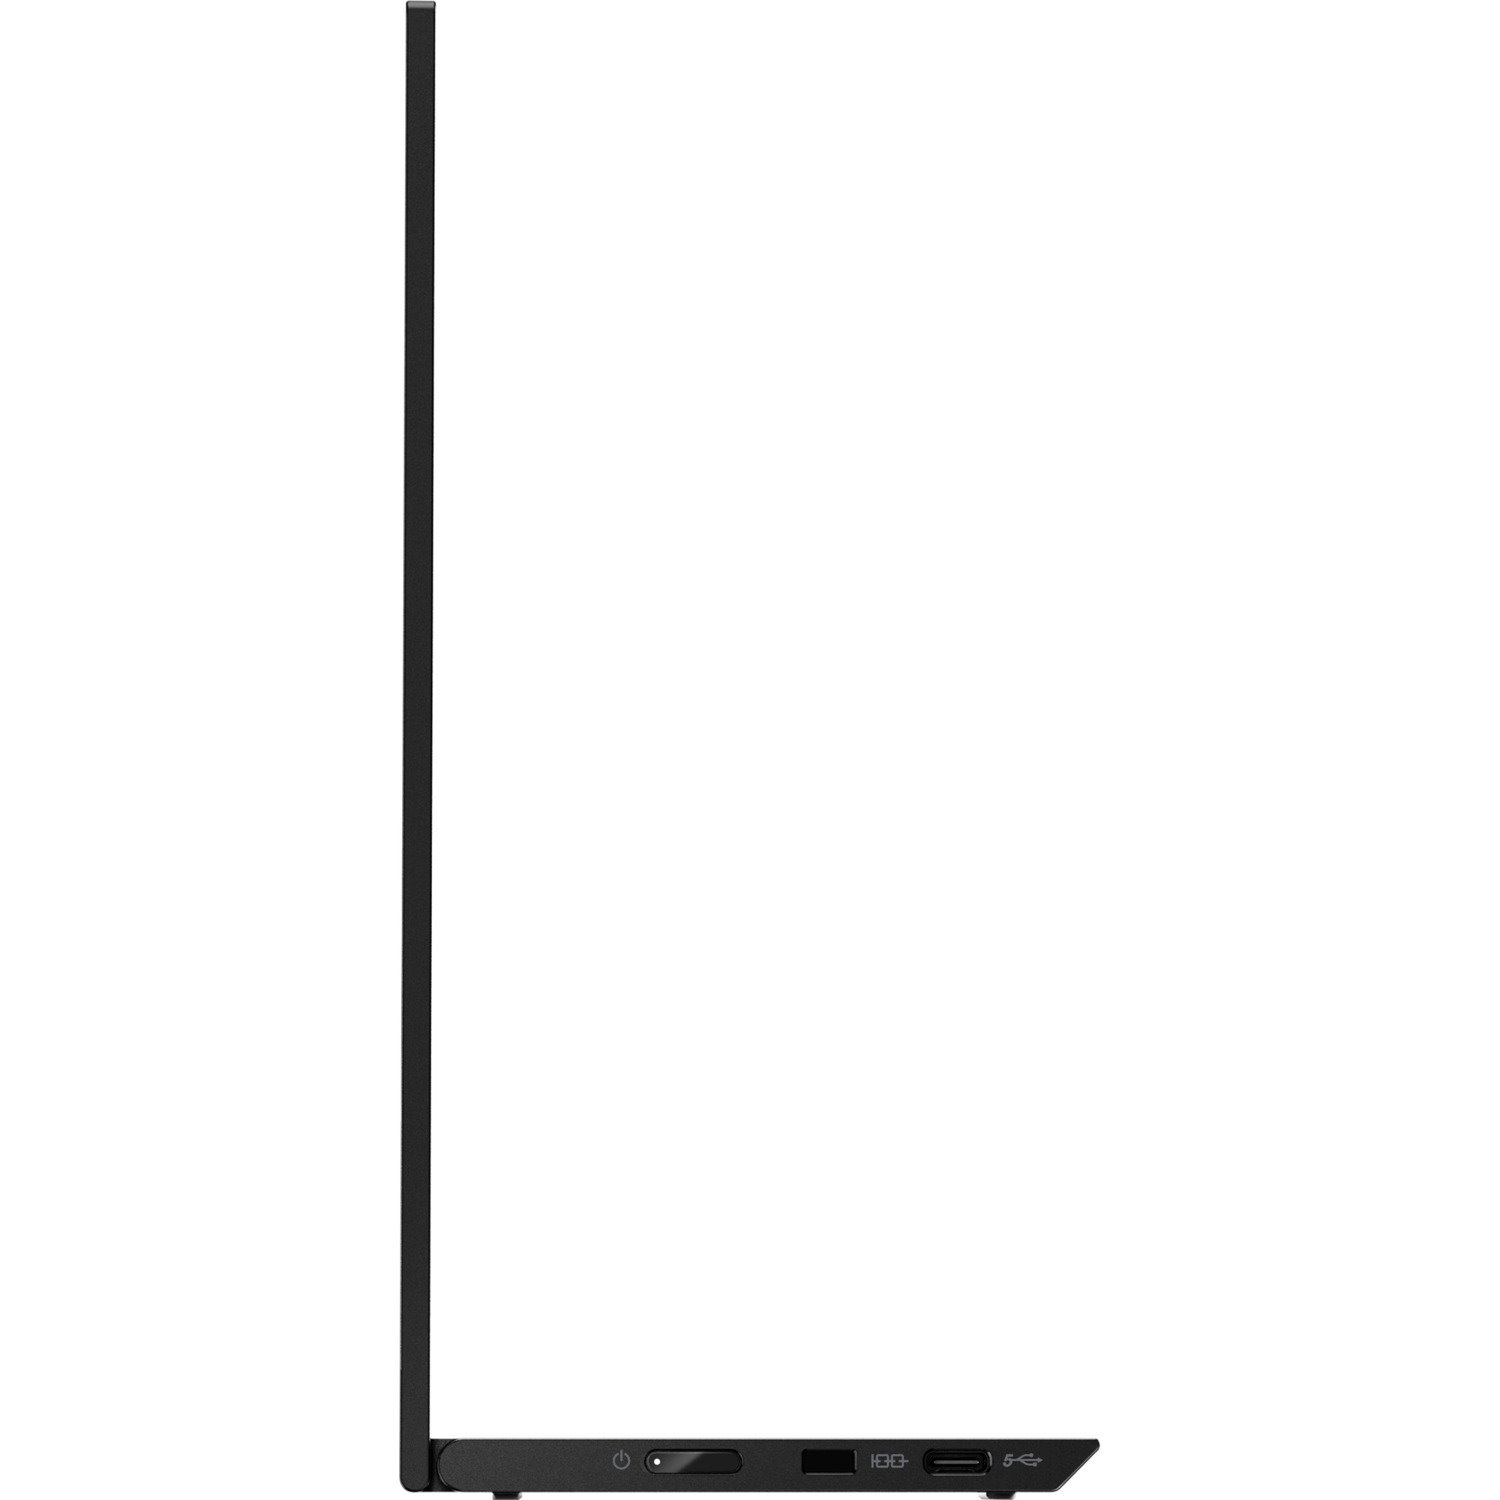 Lenovo ThinkVision M14 35.6 cm (14") Full HD LED LCD Monitor - 16:9 - Black